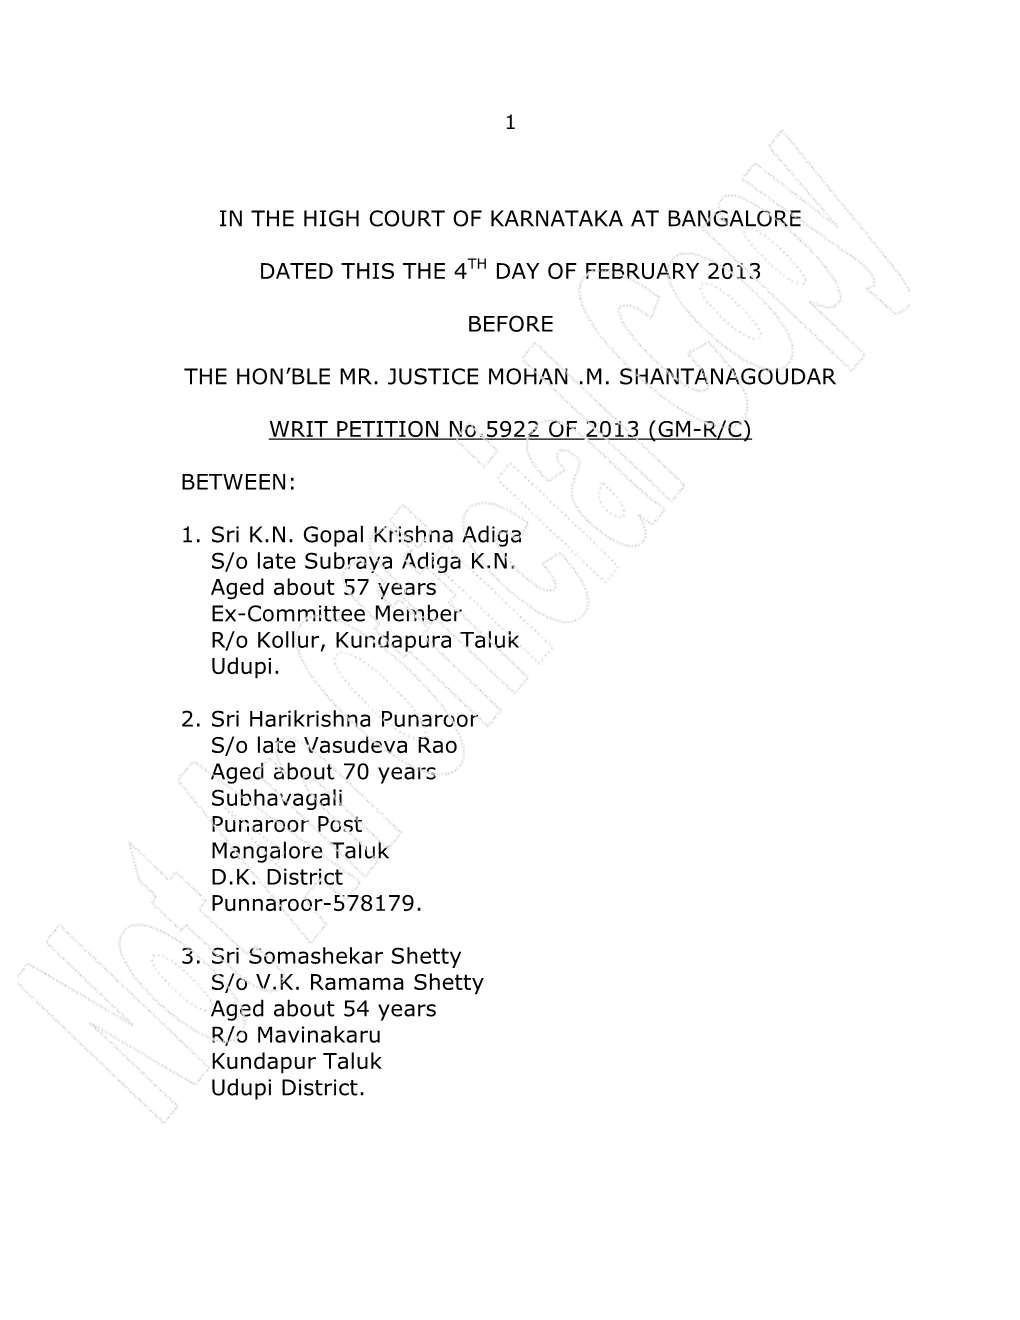 In the High Court of Karnataka at Bangalore